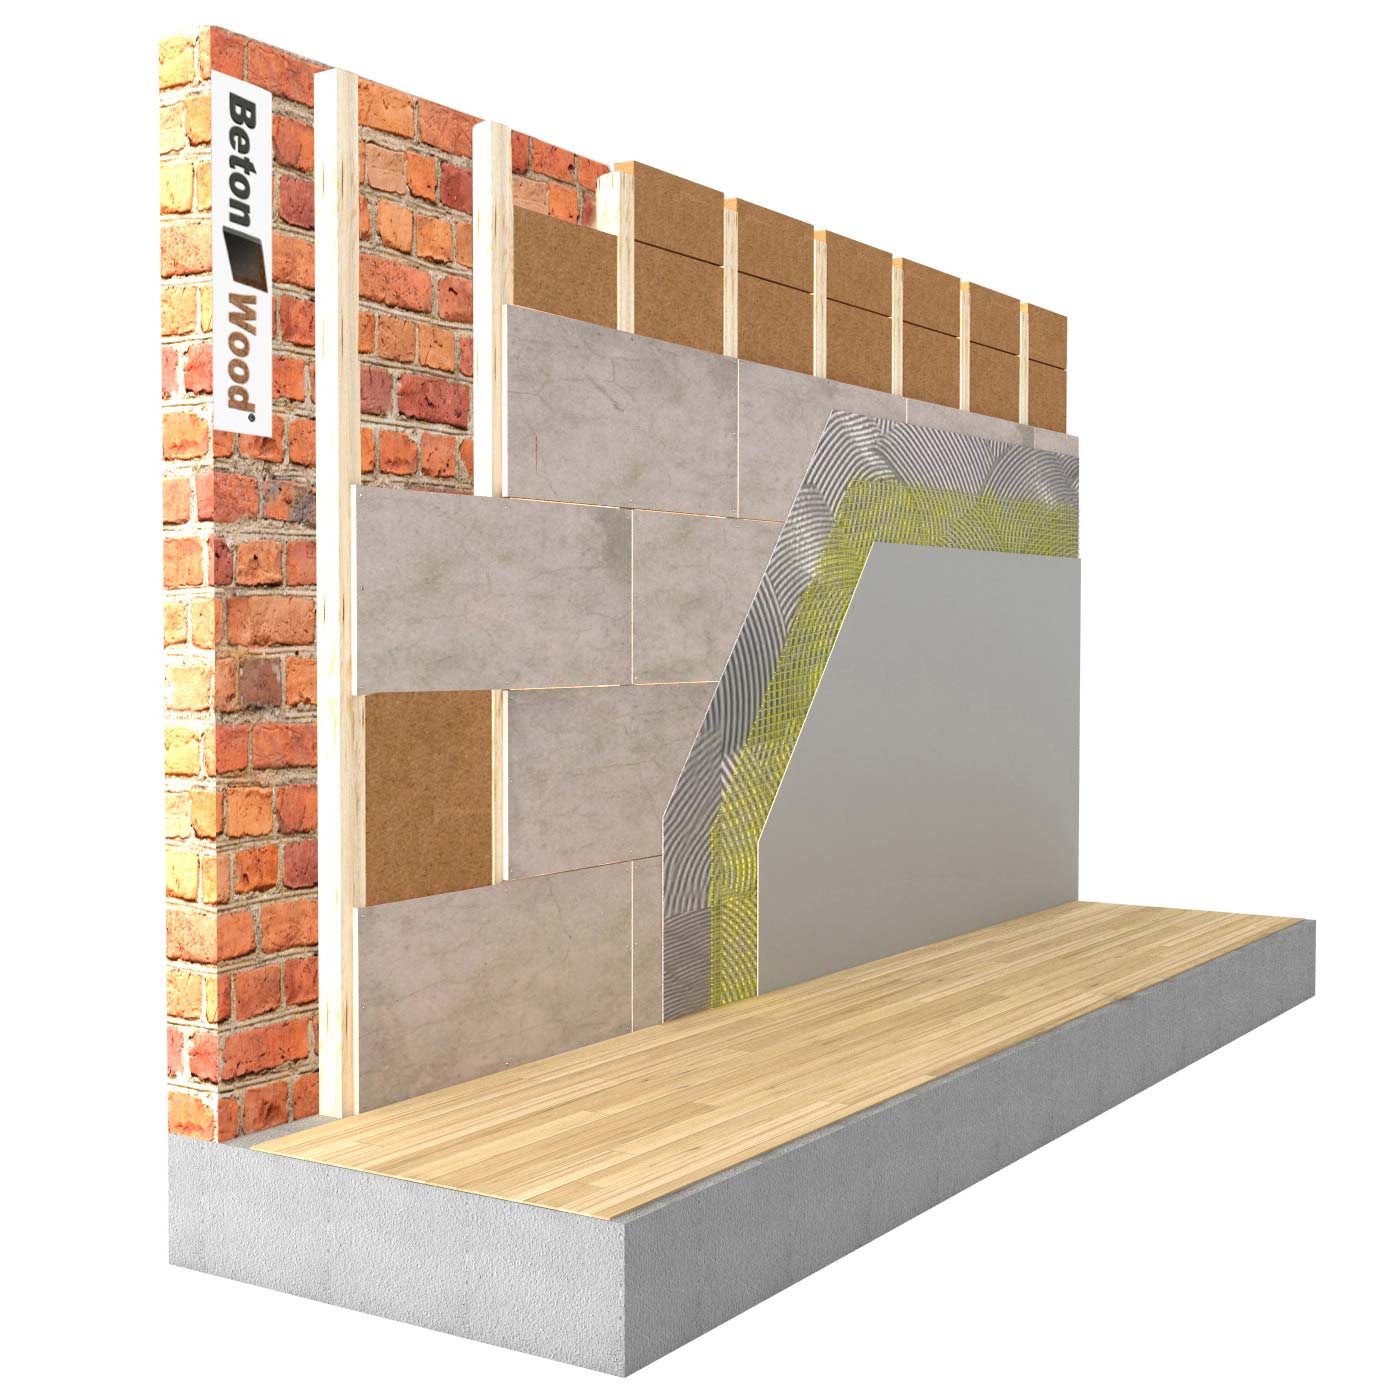 Counterwall insulation in flexible wood fiber Flex on masonry